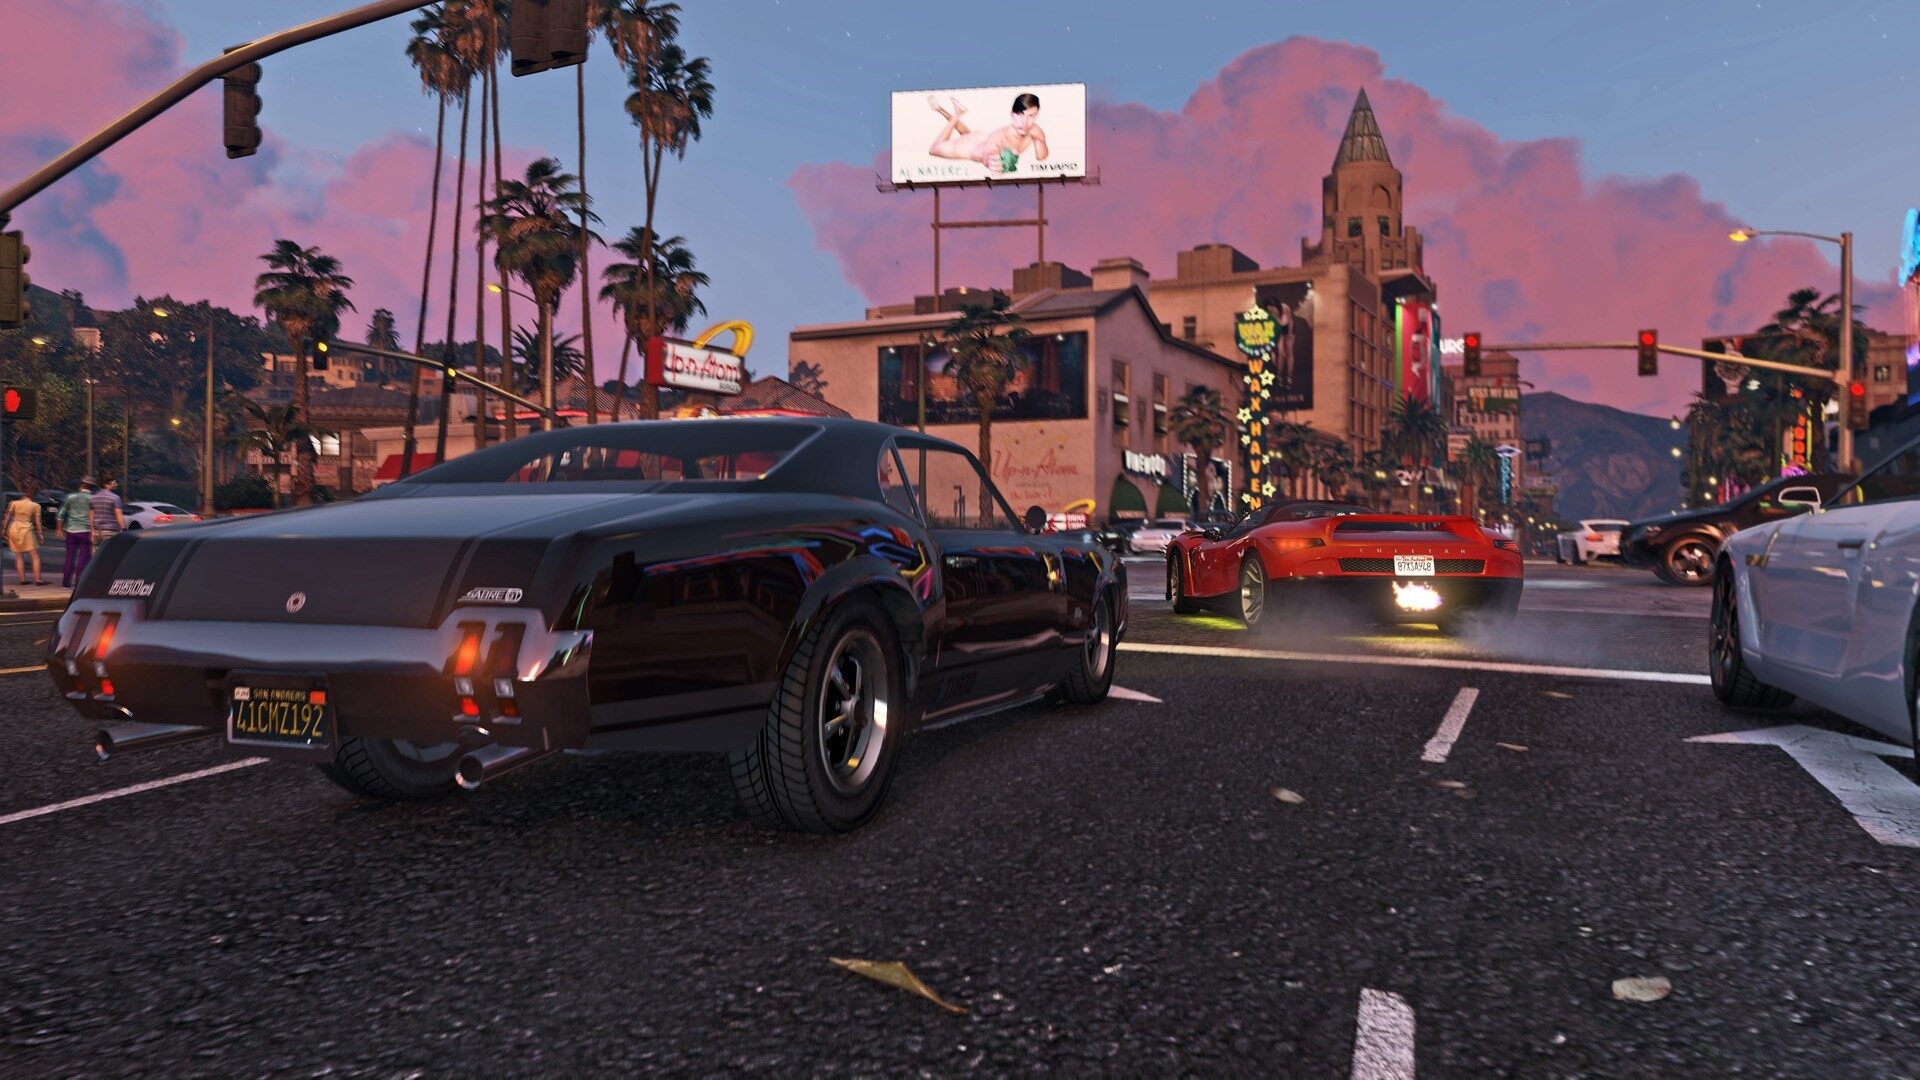 Grand Theft Auto V: Premium Online Edition Rockstar Digital Download CD Key